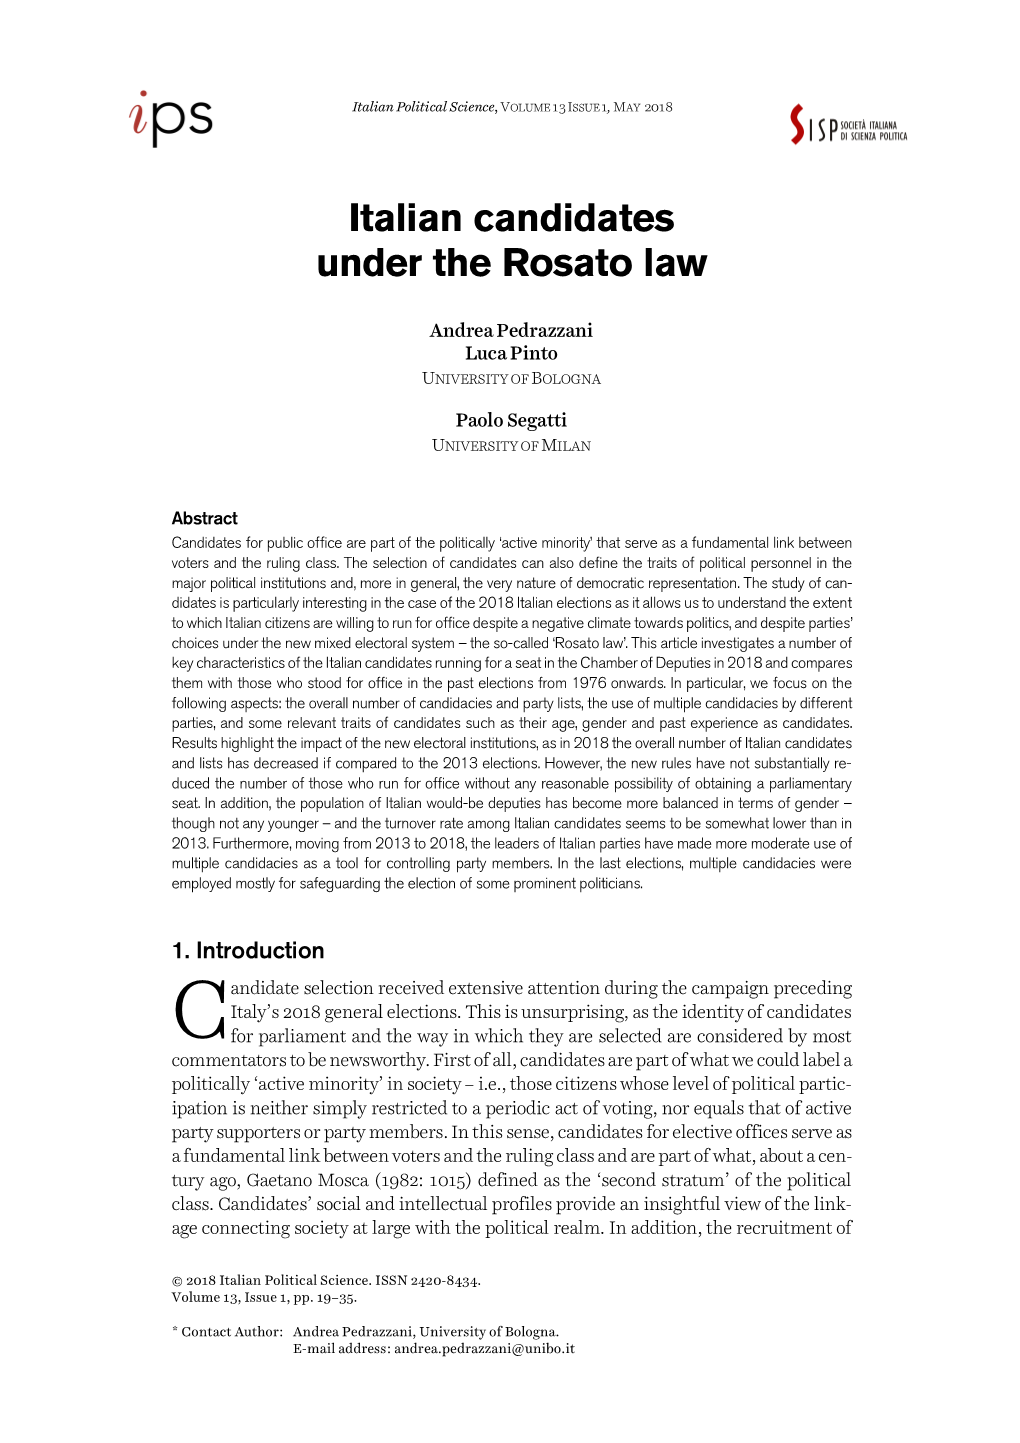 Italian Candidates Under the Rosato Law